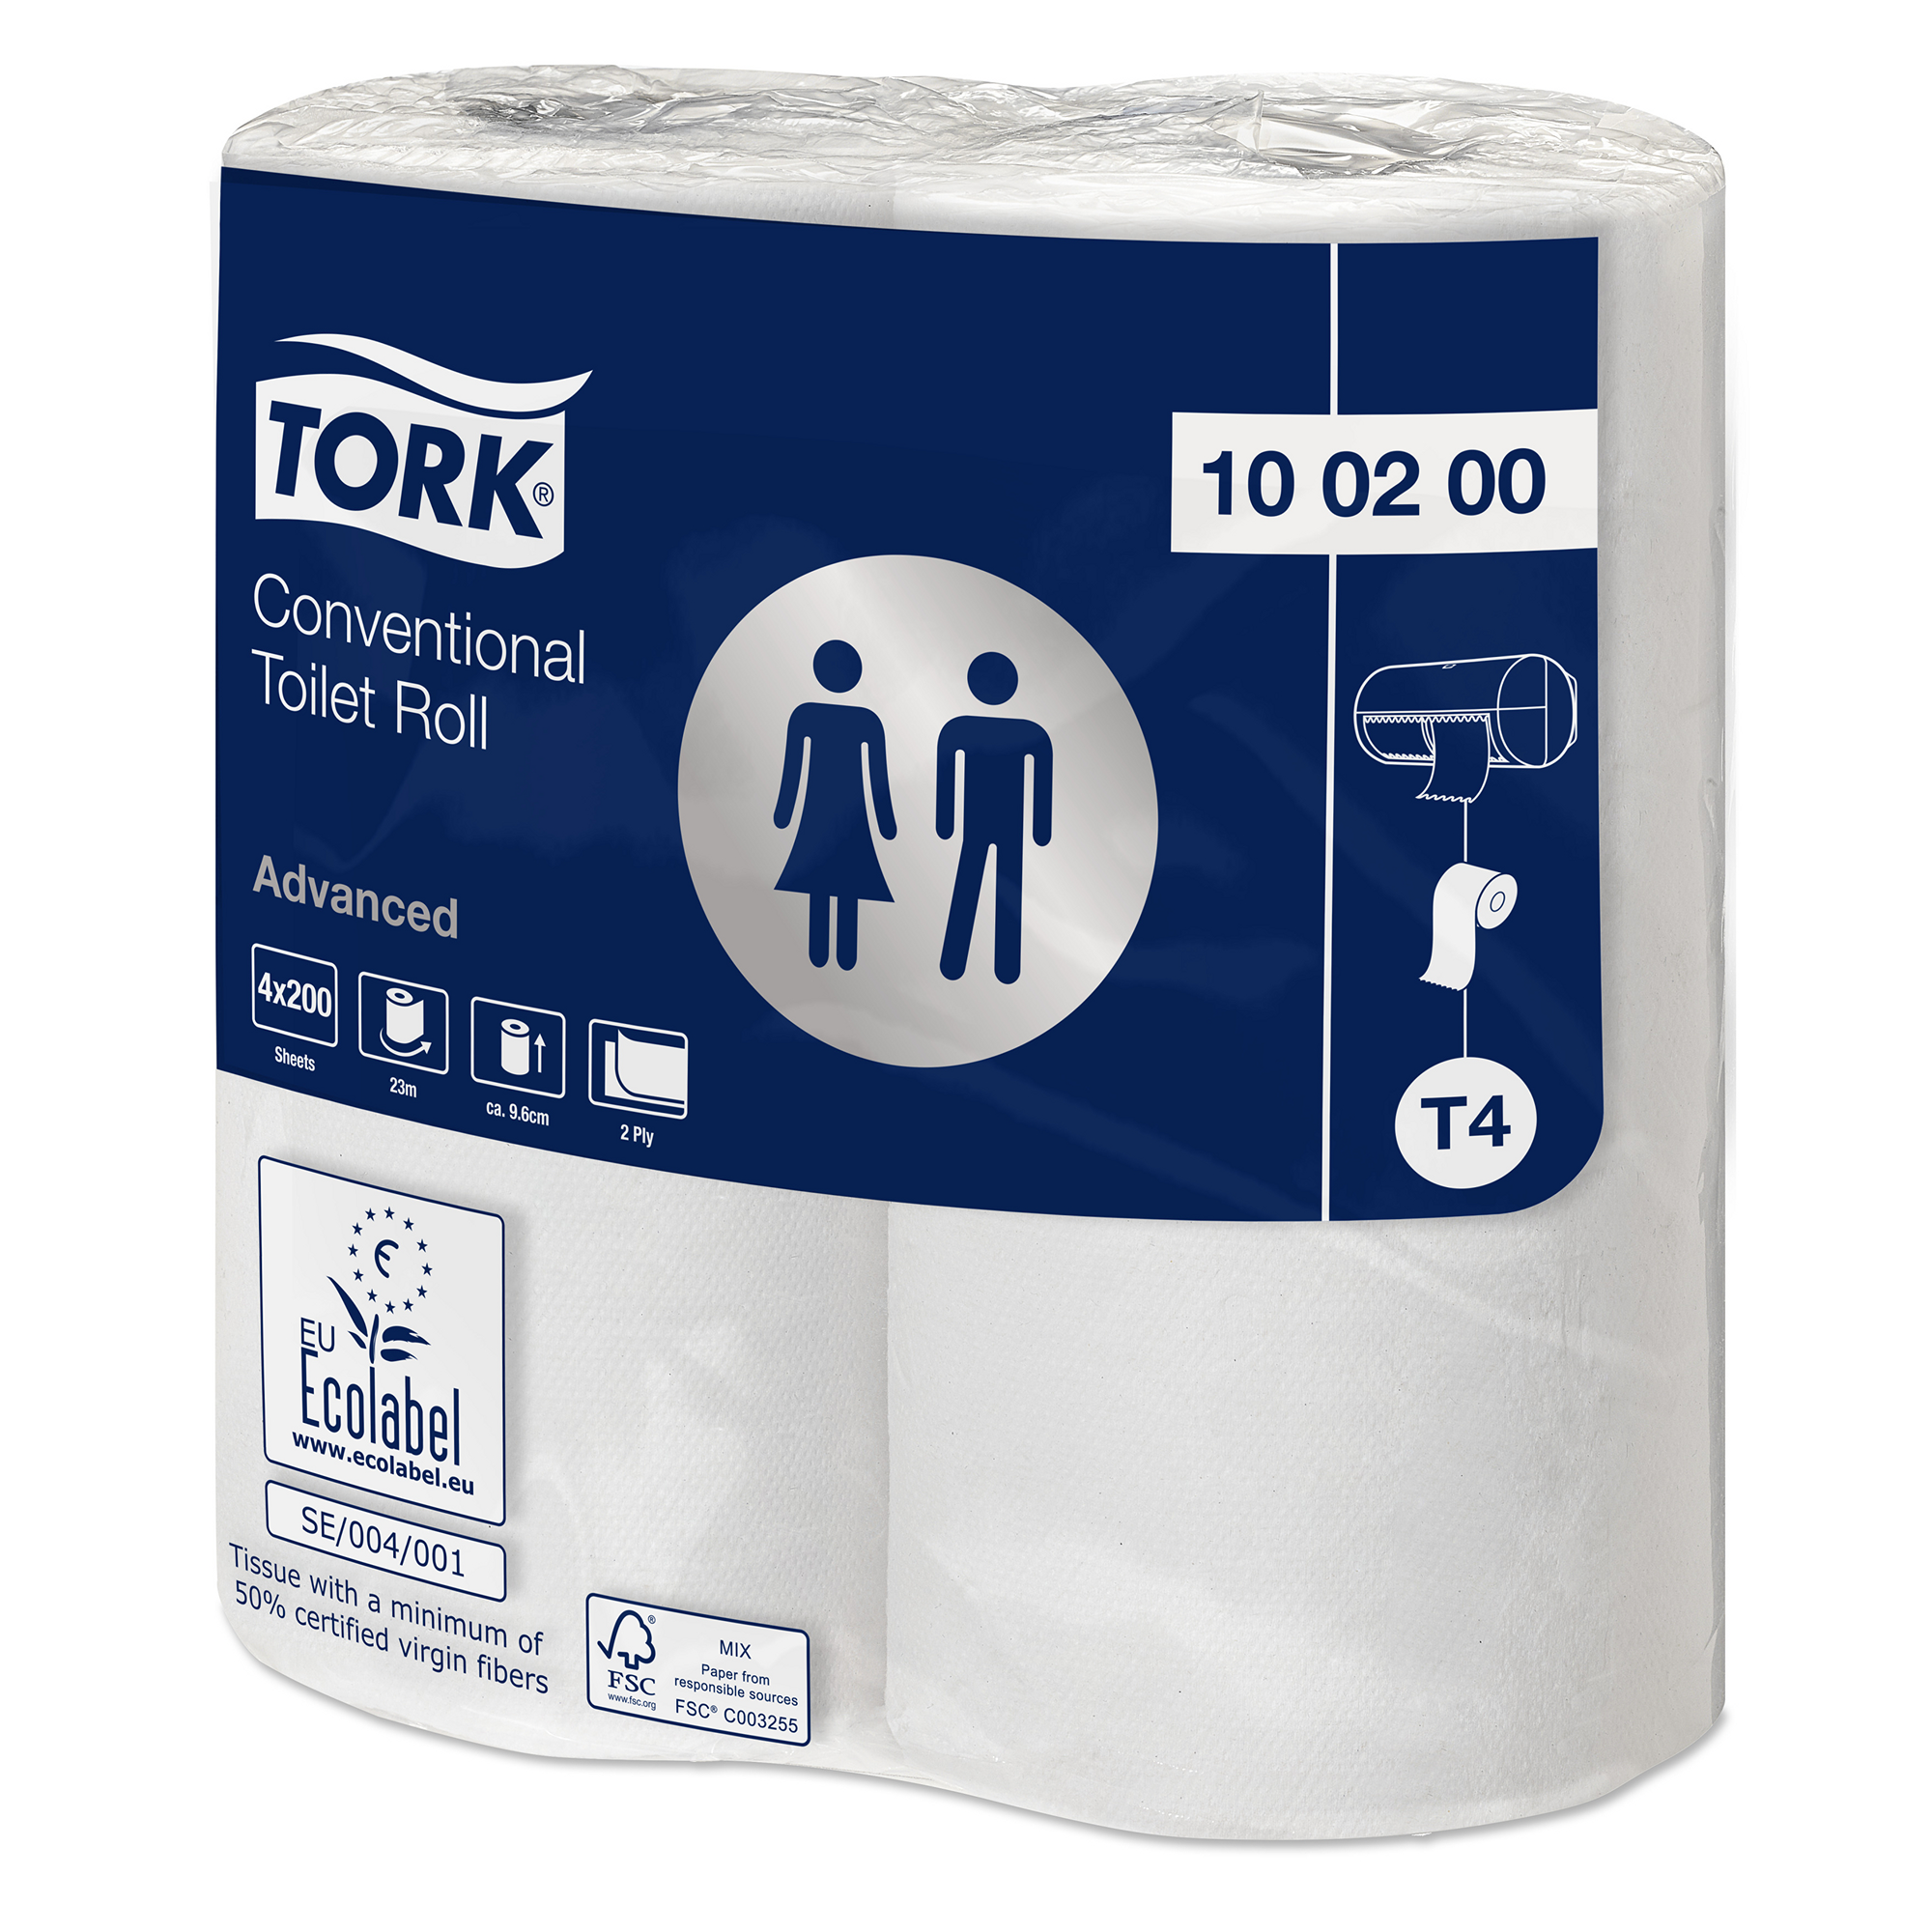 Tork Conv Toilet Roll 2ply 200 Sheet